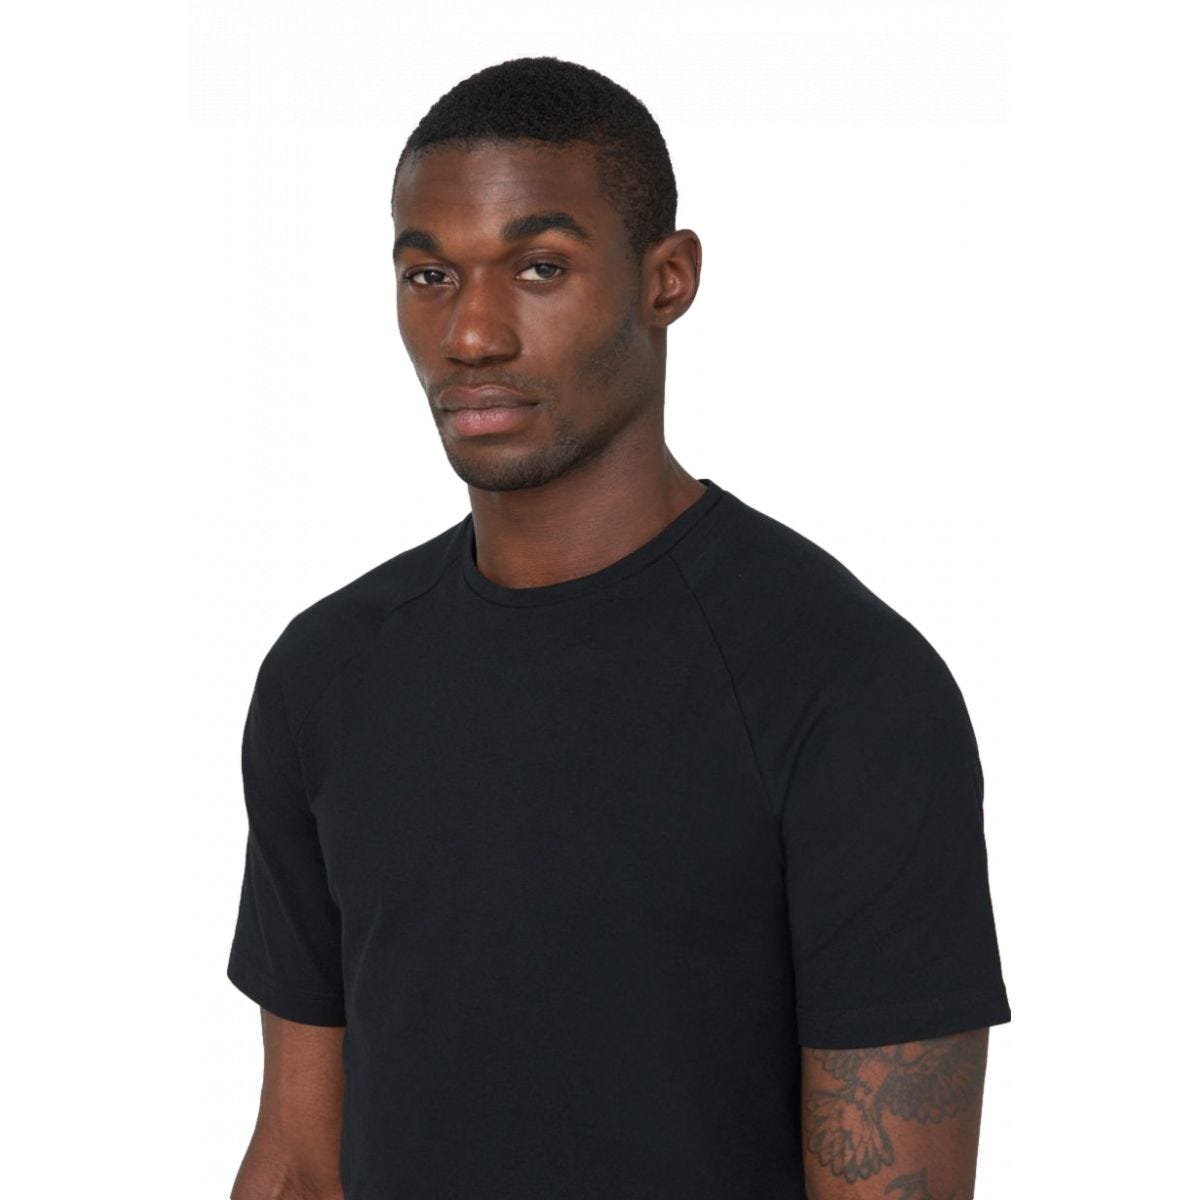 Tee-shirt Temp-IQ Noir - Dickies - Taille S 4